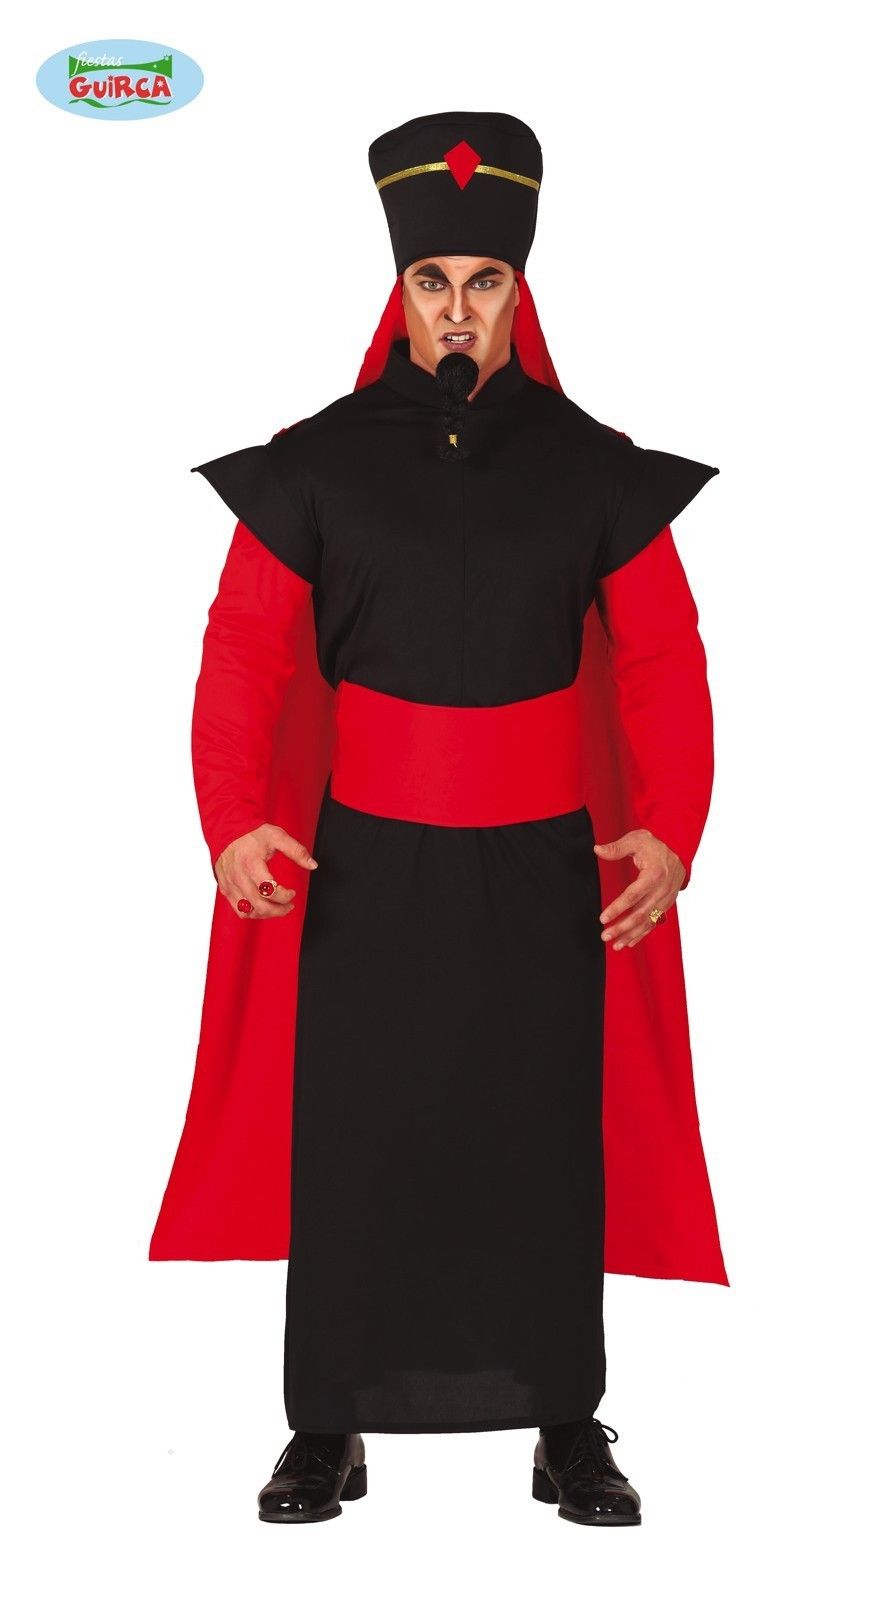 Jafar kostuum kopen? || Confettifeest.nl